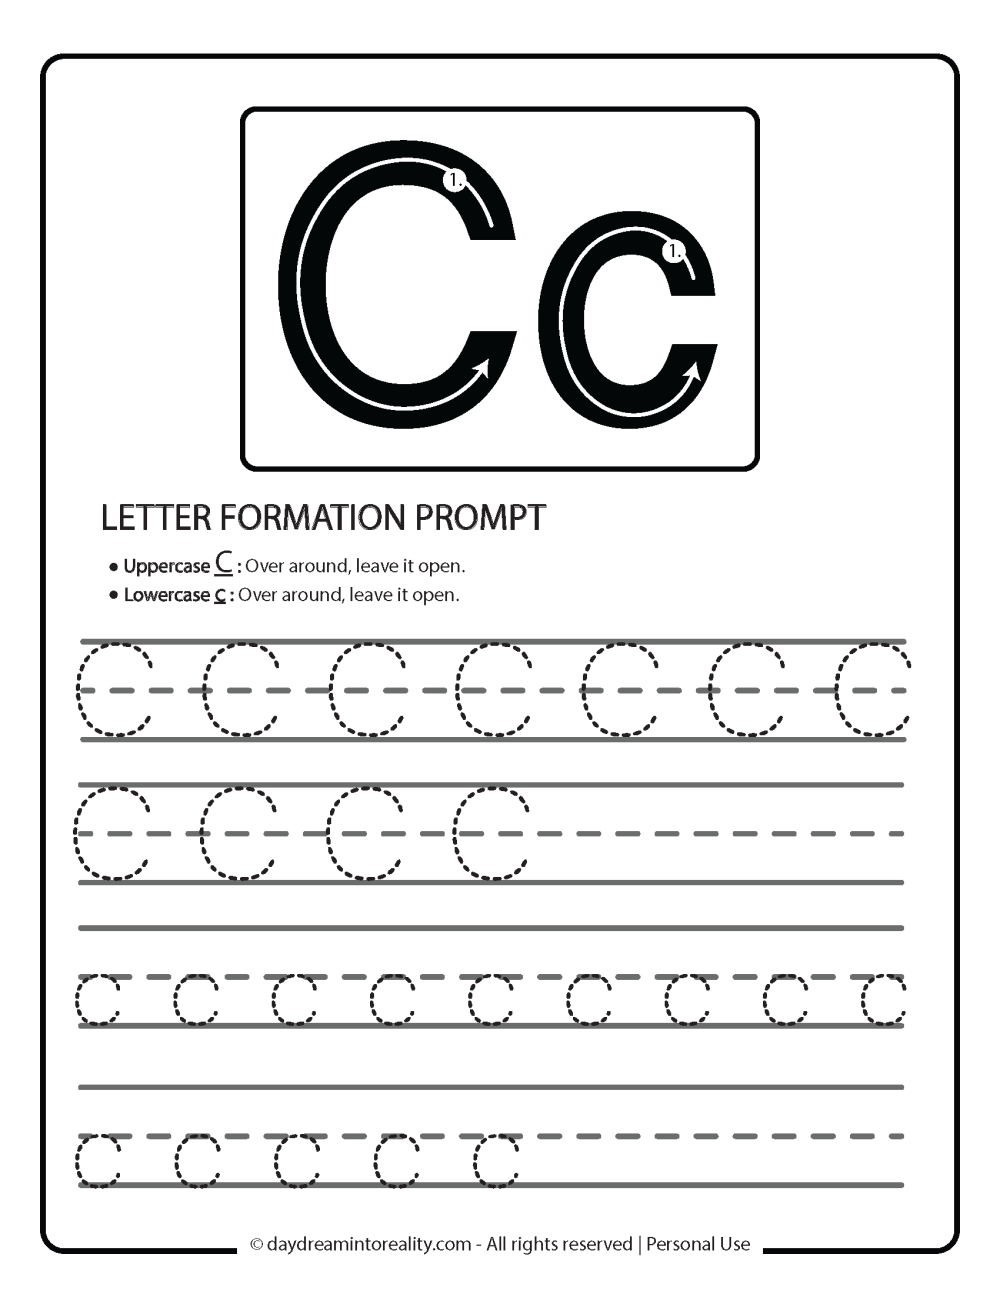 Letter C with letter formation prompt worksheet free printable